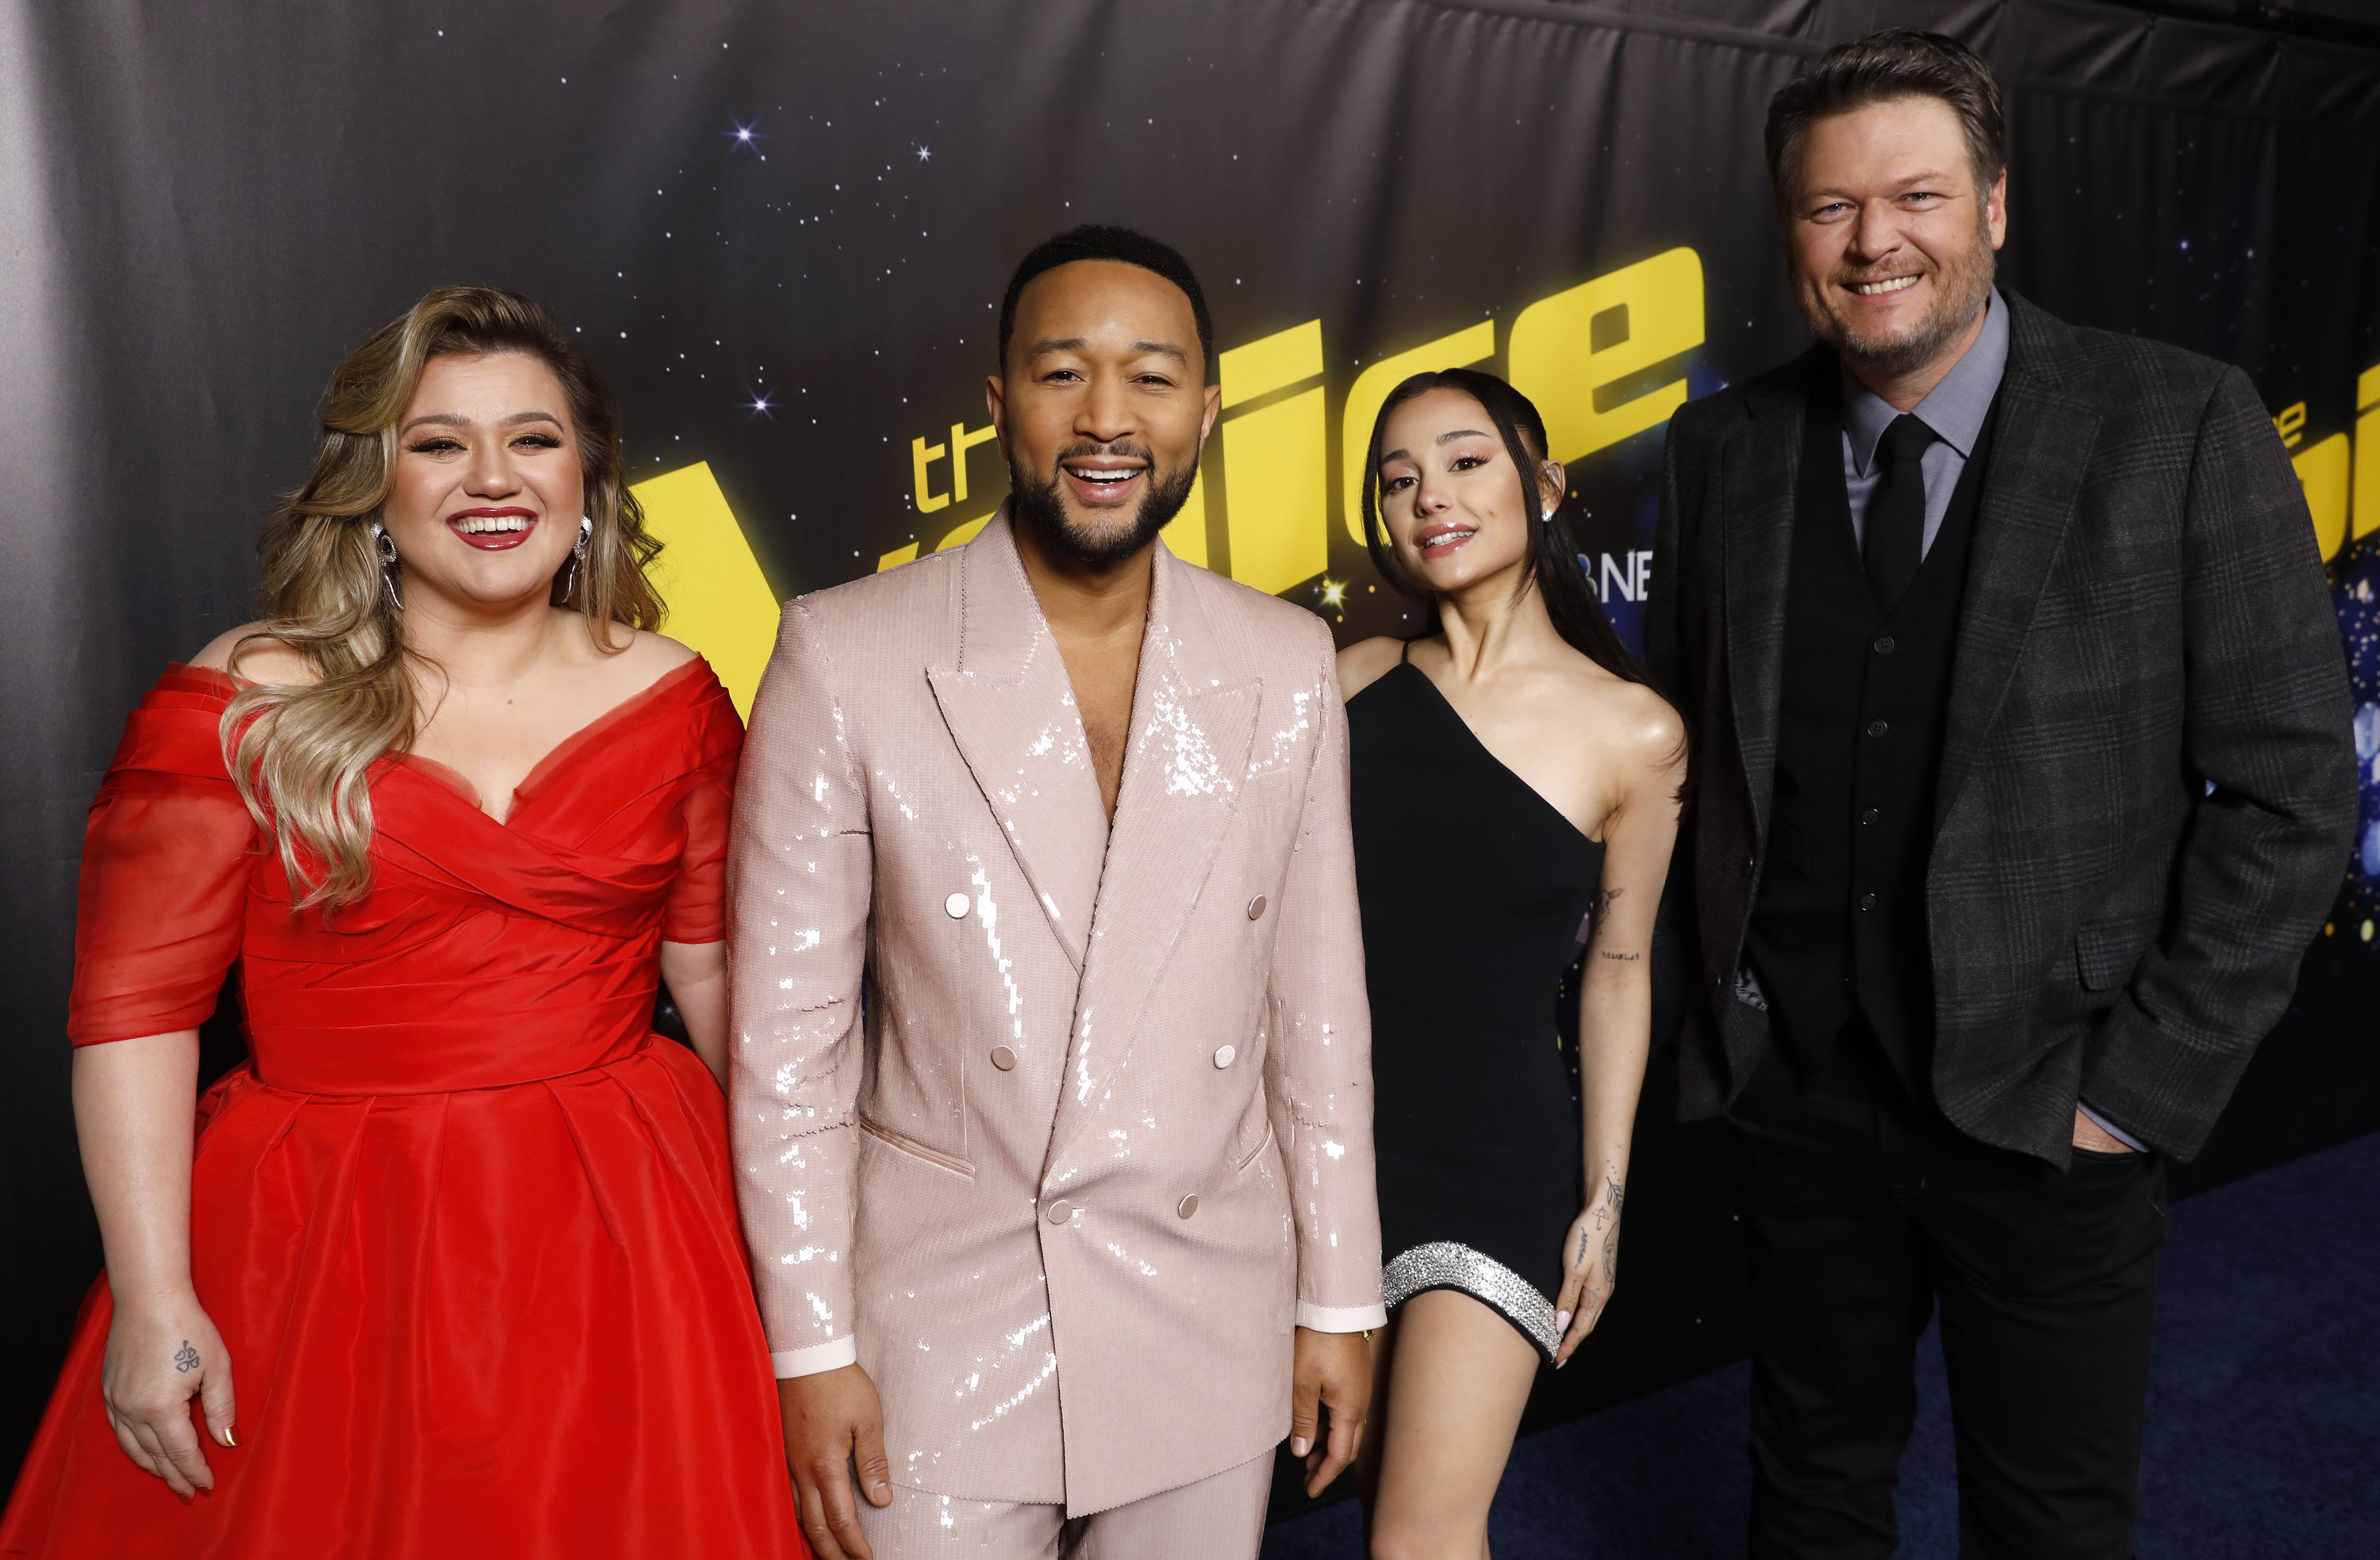 The Voice' 2022 Season 22 on NBC - Coaches, Premiere Date, and Cast